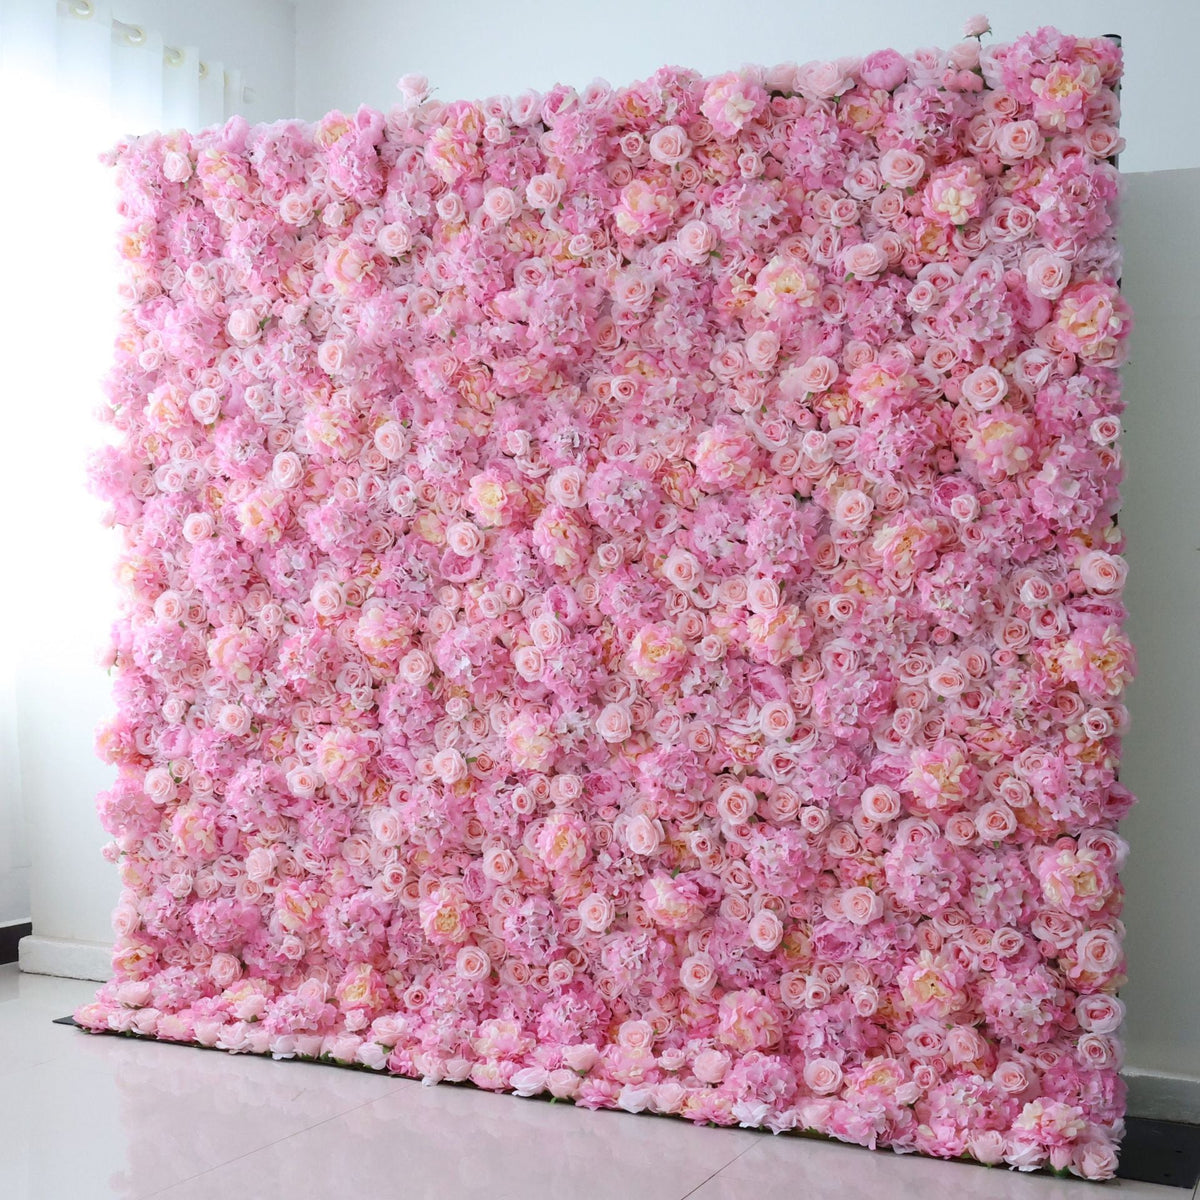 3D Artificial Flower Wall Arrangement Wedding Party Birthday Backdrop Decor HQ1337